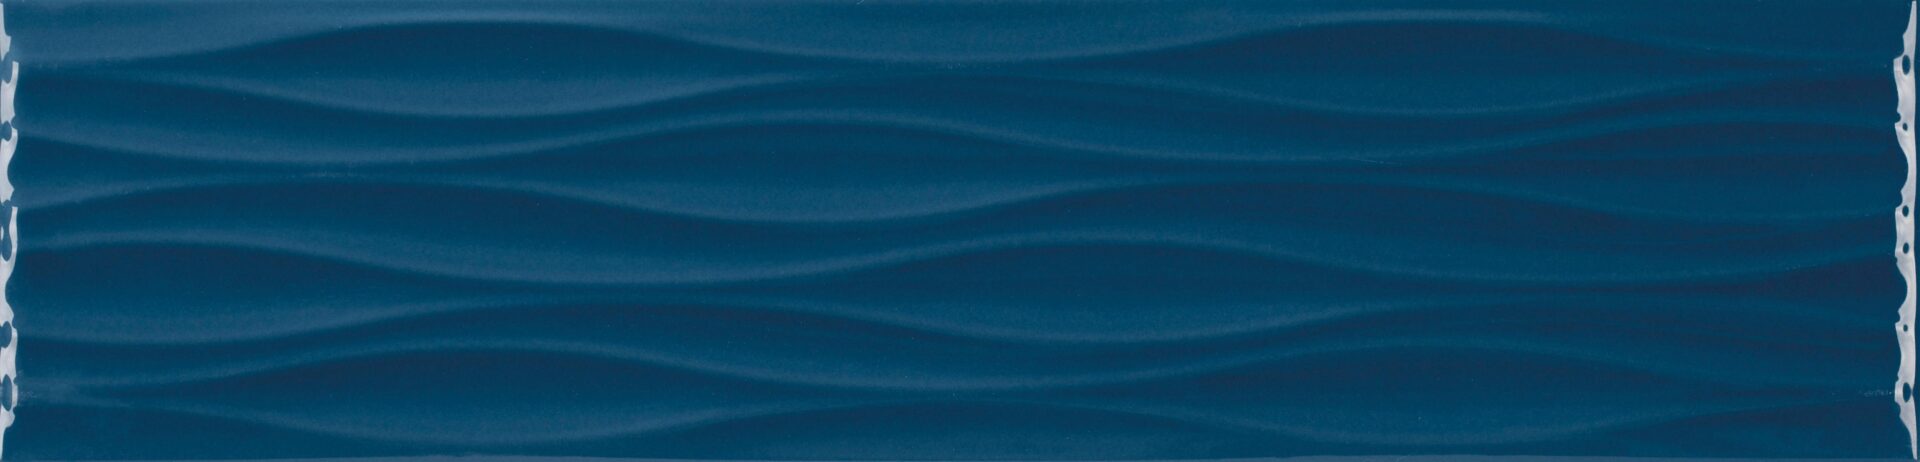 westhouse deep sea ripple